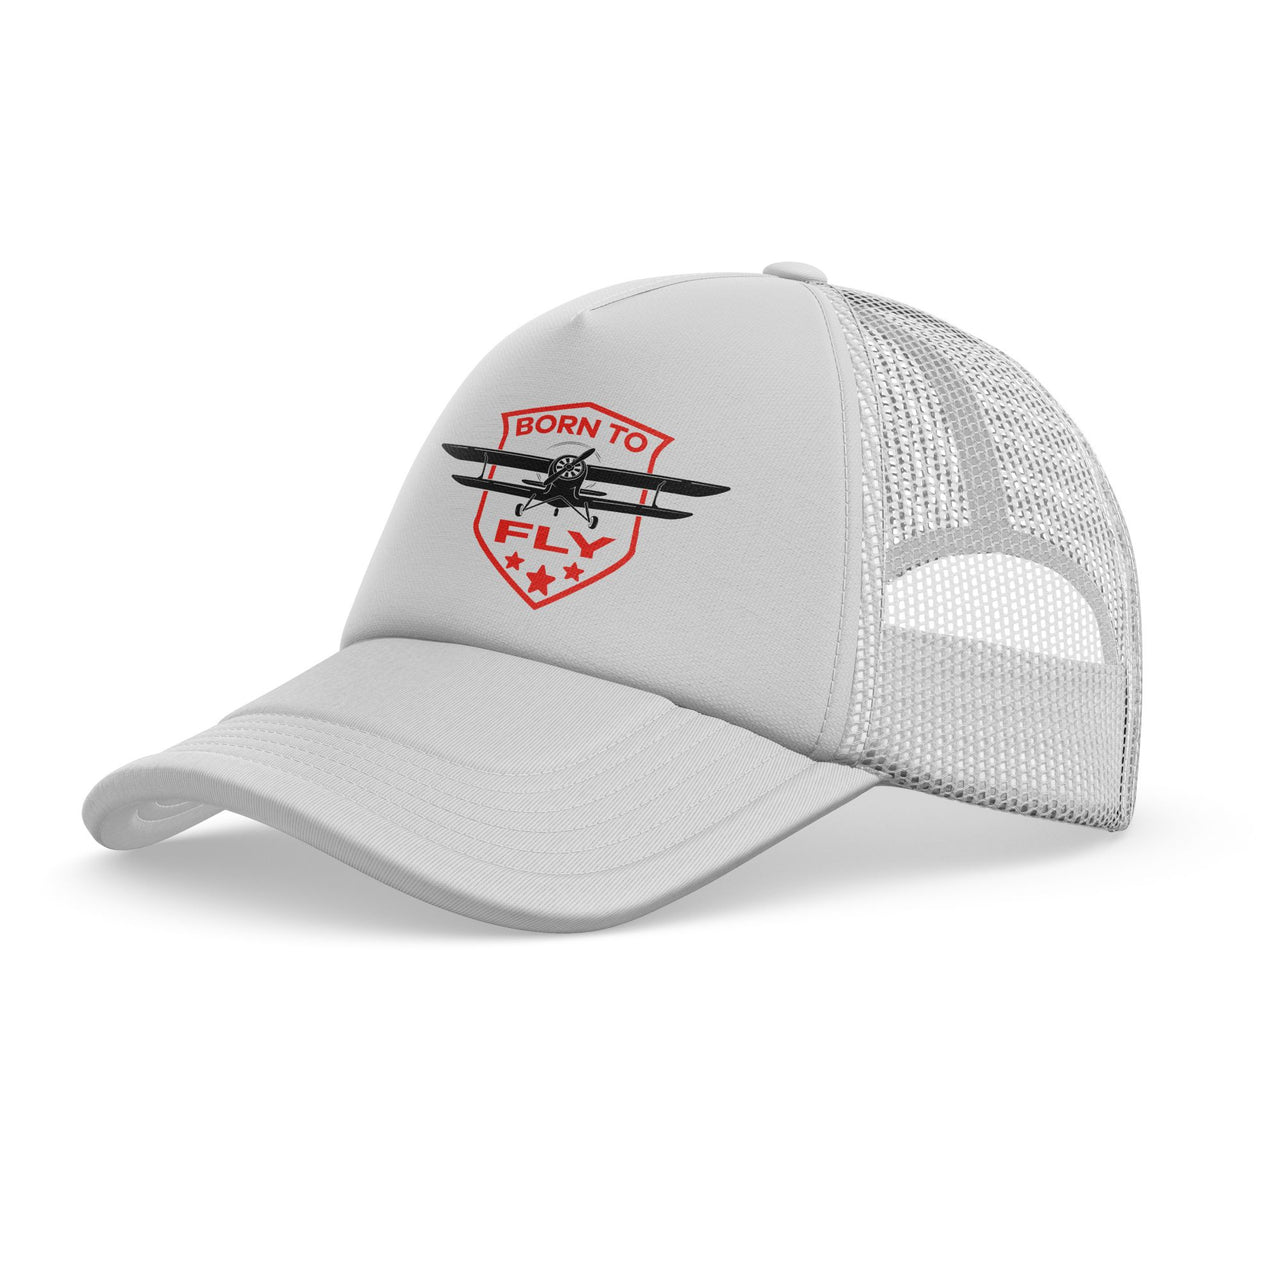 Super Born To Fly Designed Trucker Caps & Hats